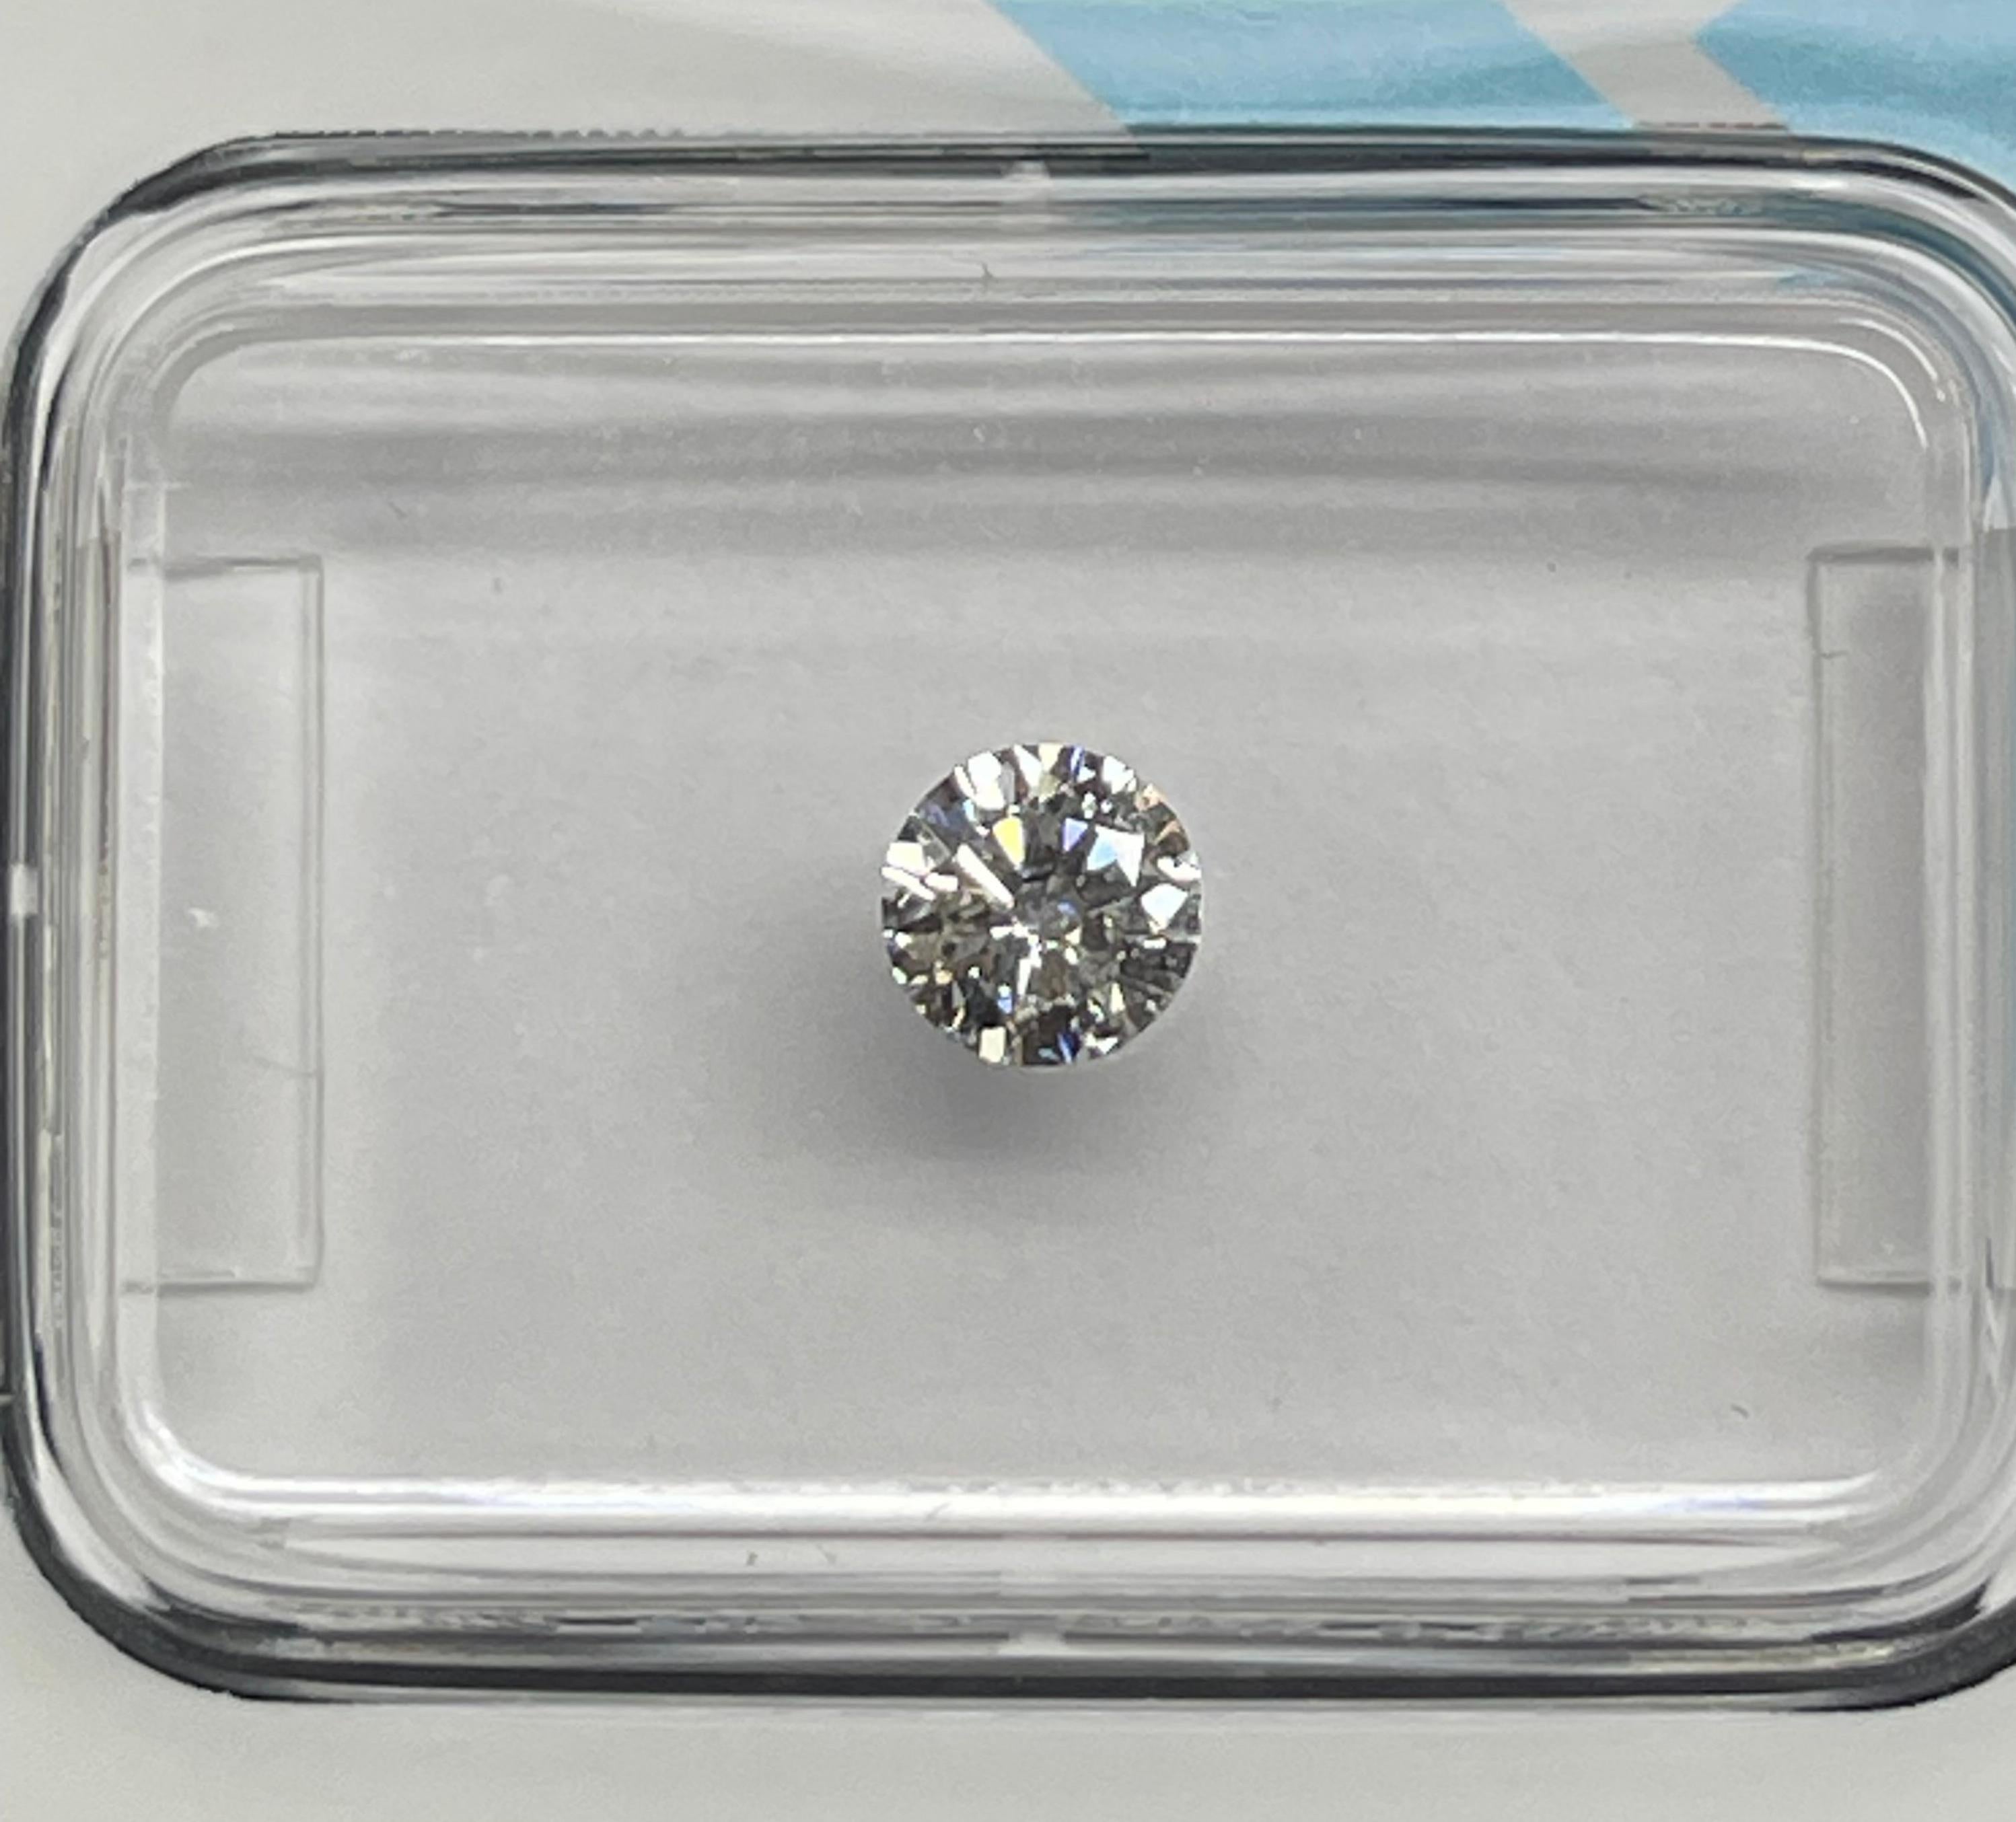 Natural Diamond graded by IGI.

Shape: Round Brilliant
Weight: 0.28 CT
Color: D
Clarity: VS2
Cut: Excellent
Polish: Excellent
Symmetry: Excellent
Fluorescence: Very Slight
Laser inscription : IGI 630434196